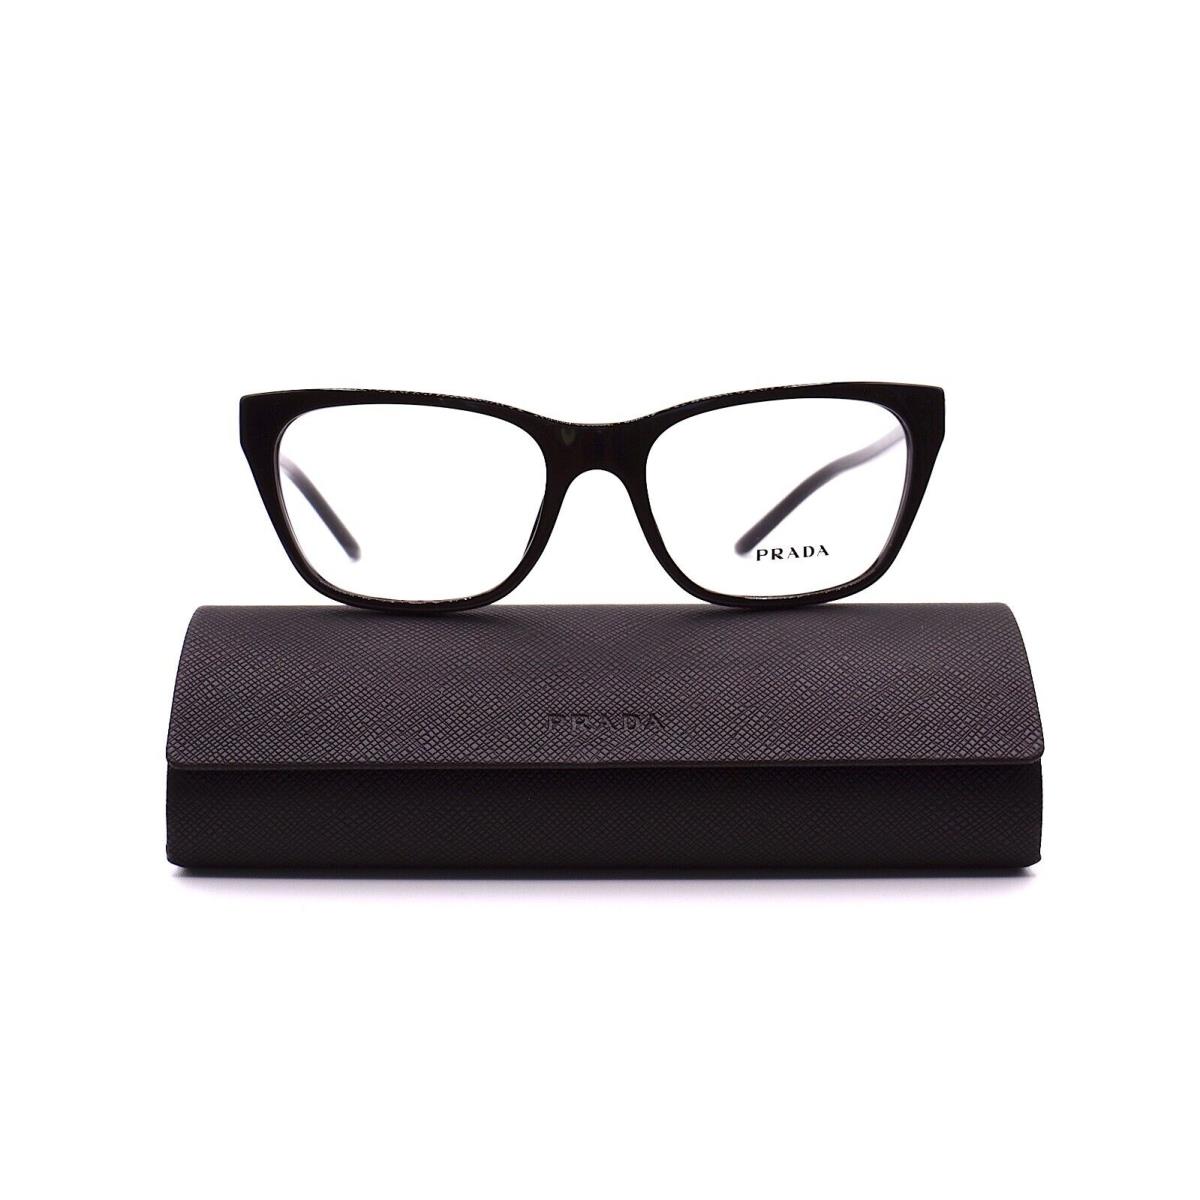 Prada eyeglasses  - Frame: Black 5